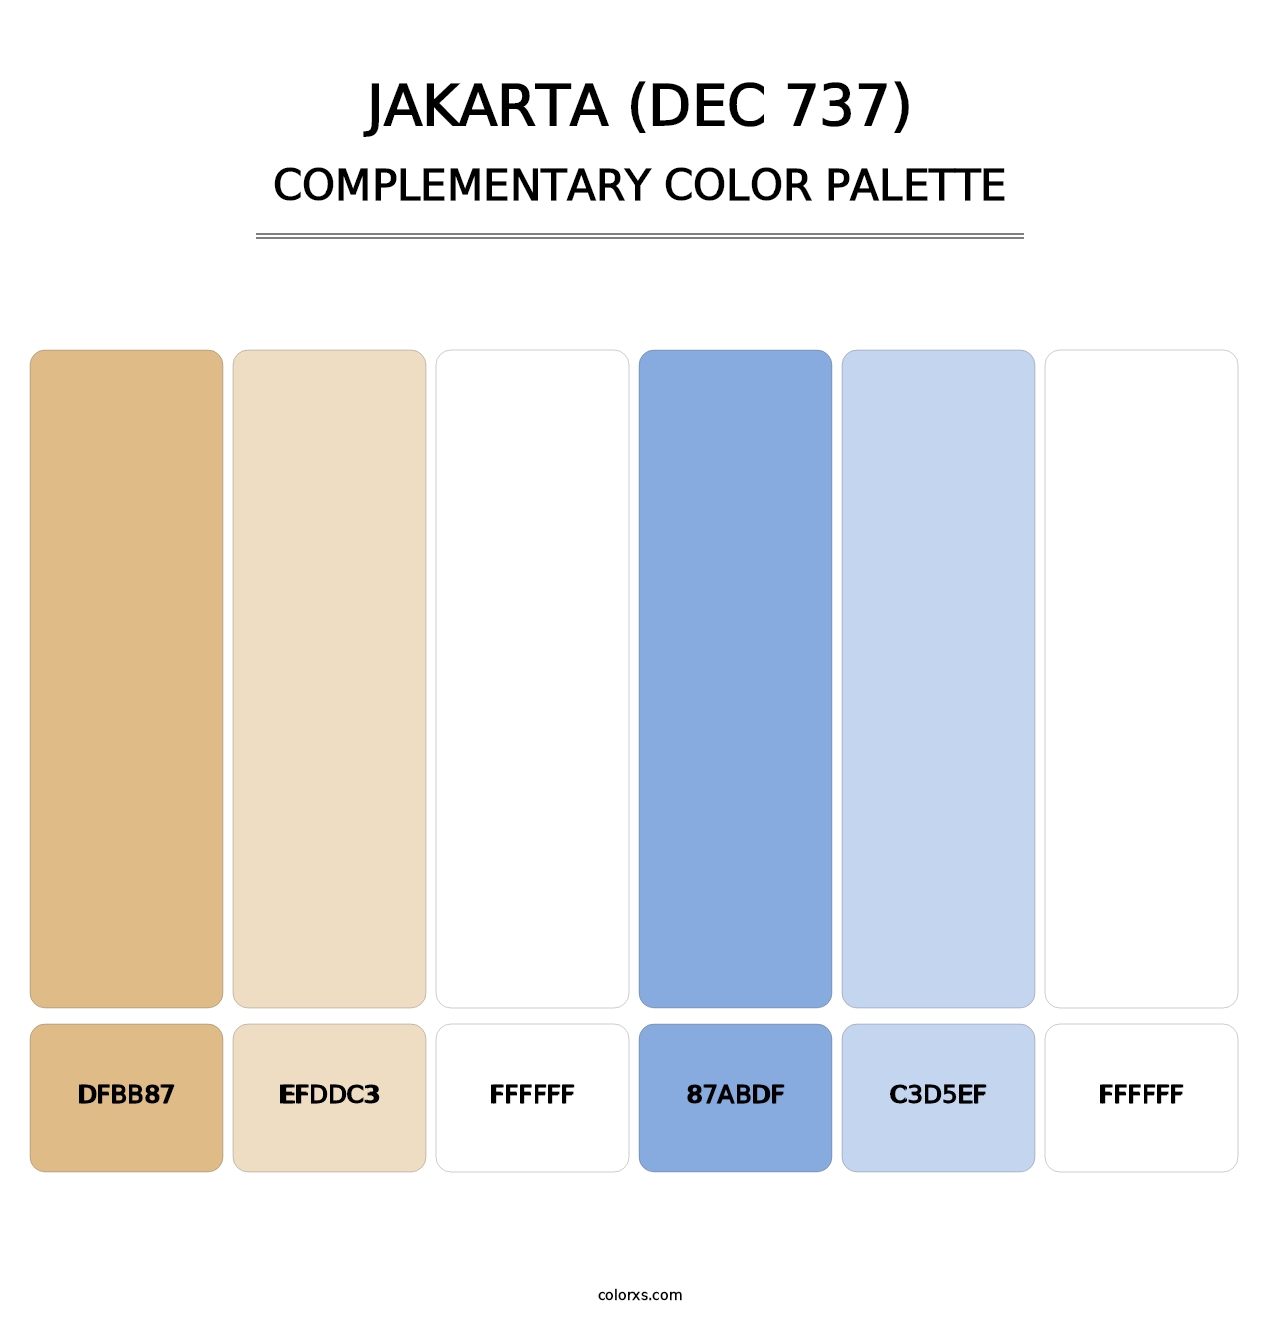 Jakarta (DEC 737) - Complementary Color Palette